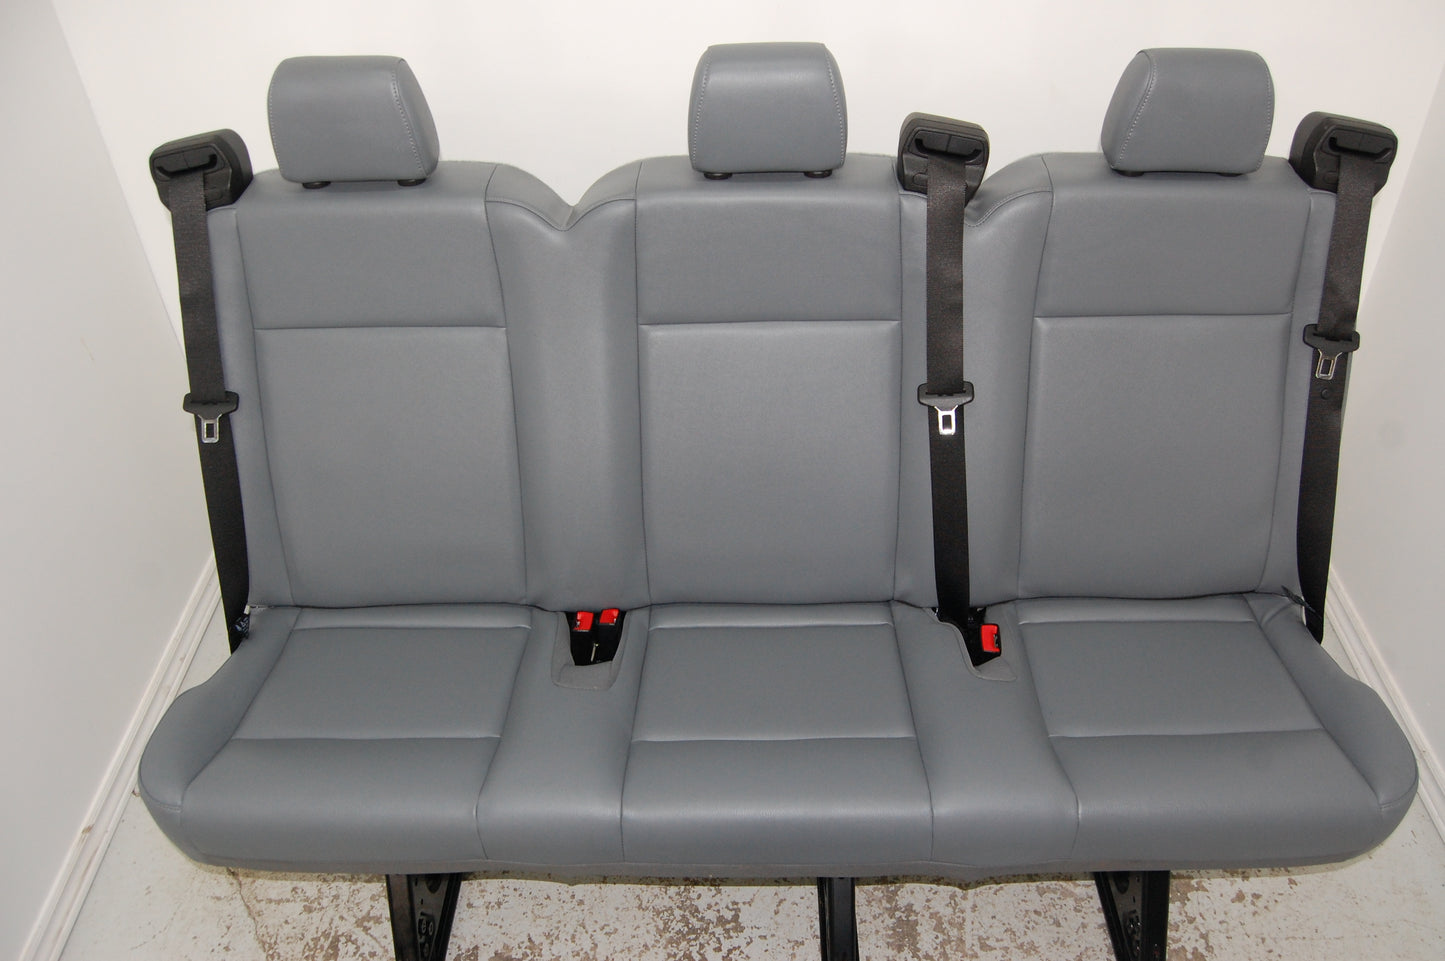 Ford Transit Passenger Van 2018 Grey Vinyl Removeable 63 inch 3 Seater Triple Bench Seat Integrated Seatbelts Cargo VANLIFE PROMASTER SPRINTER Camper